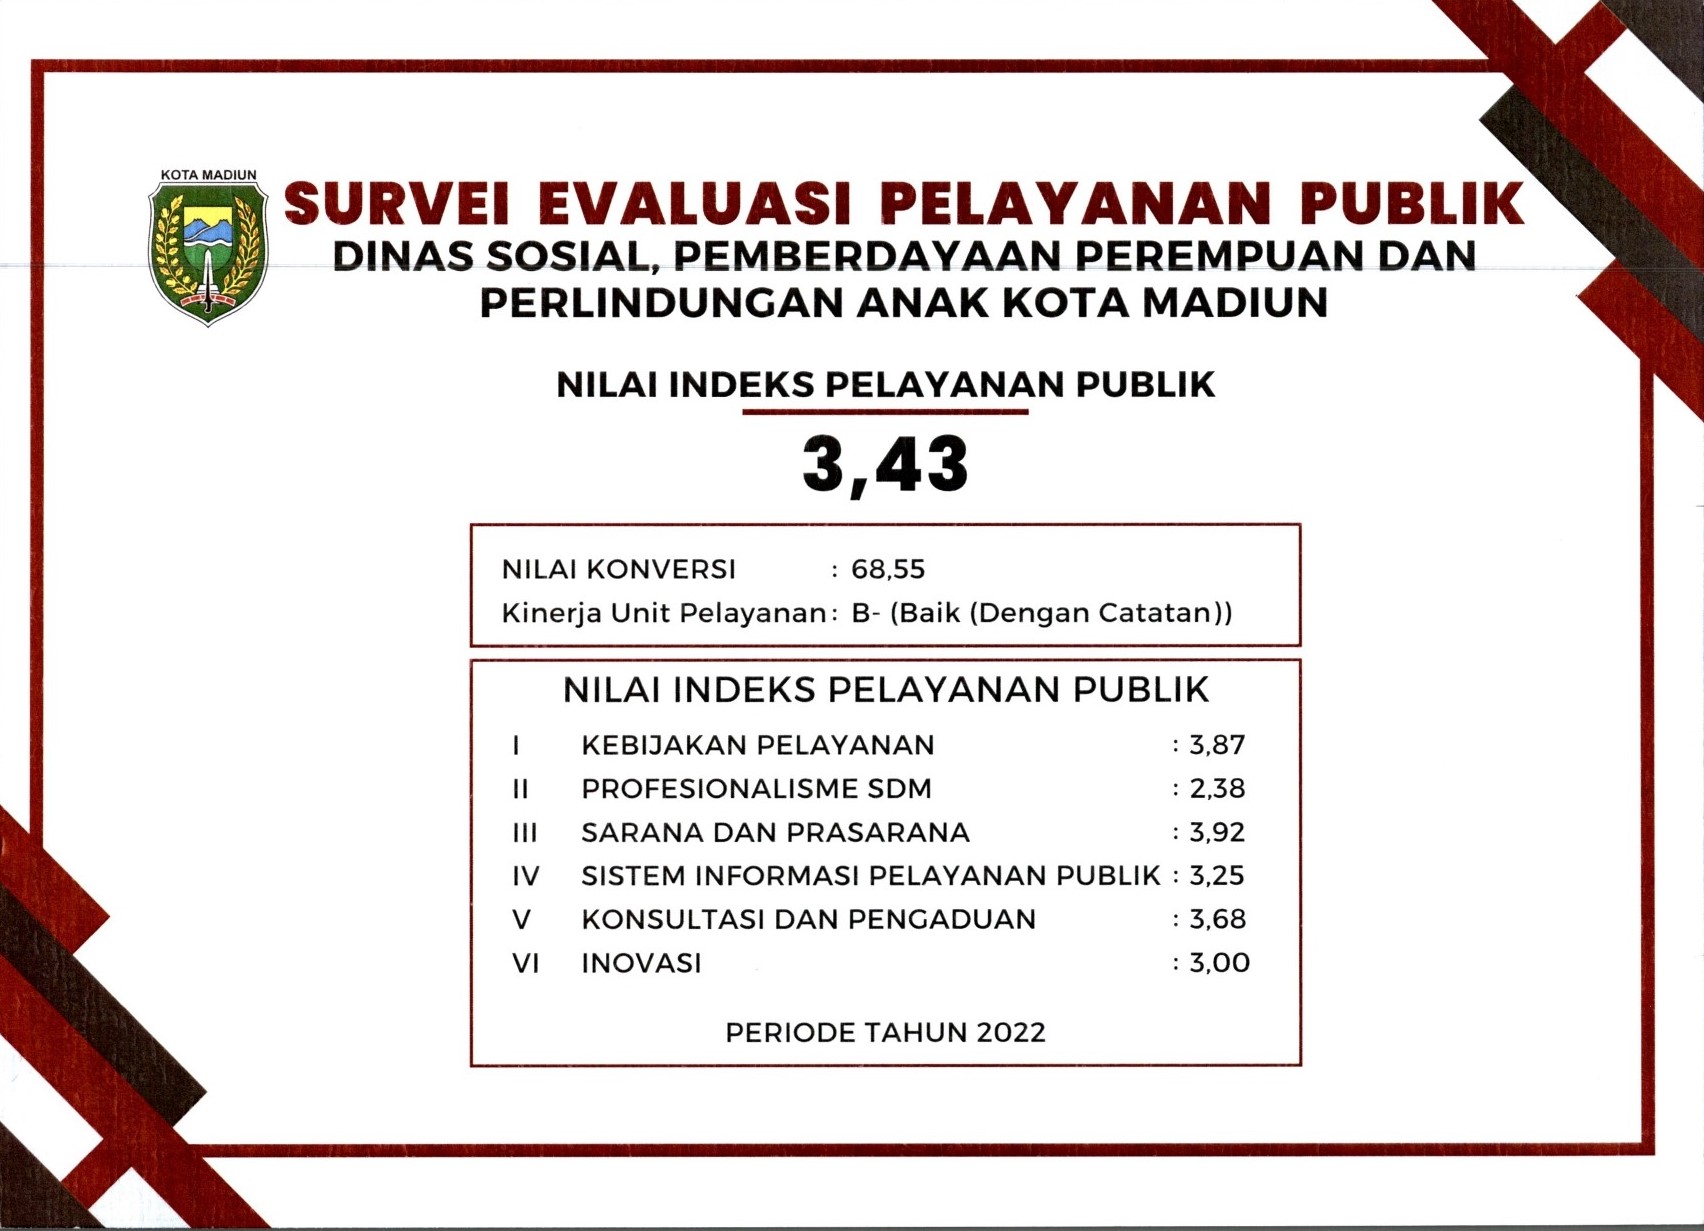 IPP (Indek Pelayanan Publik) 2022